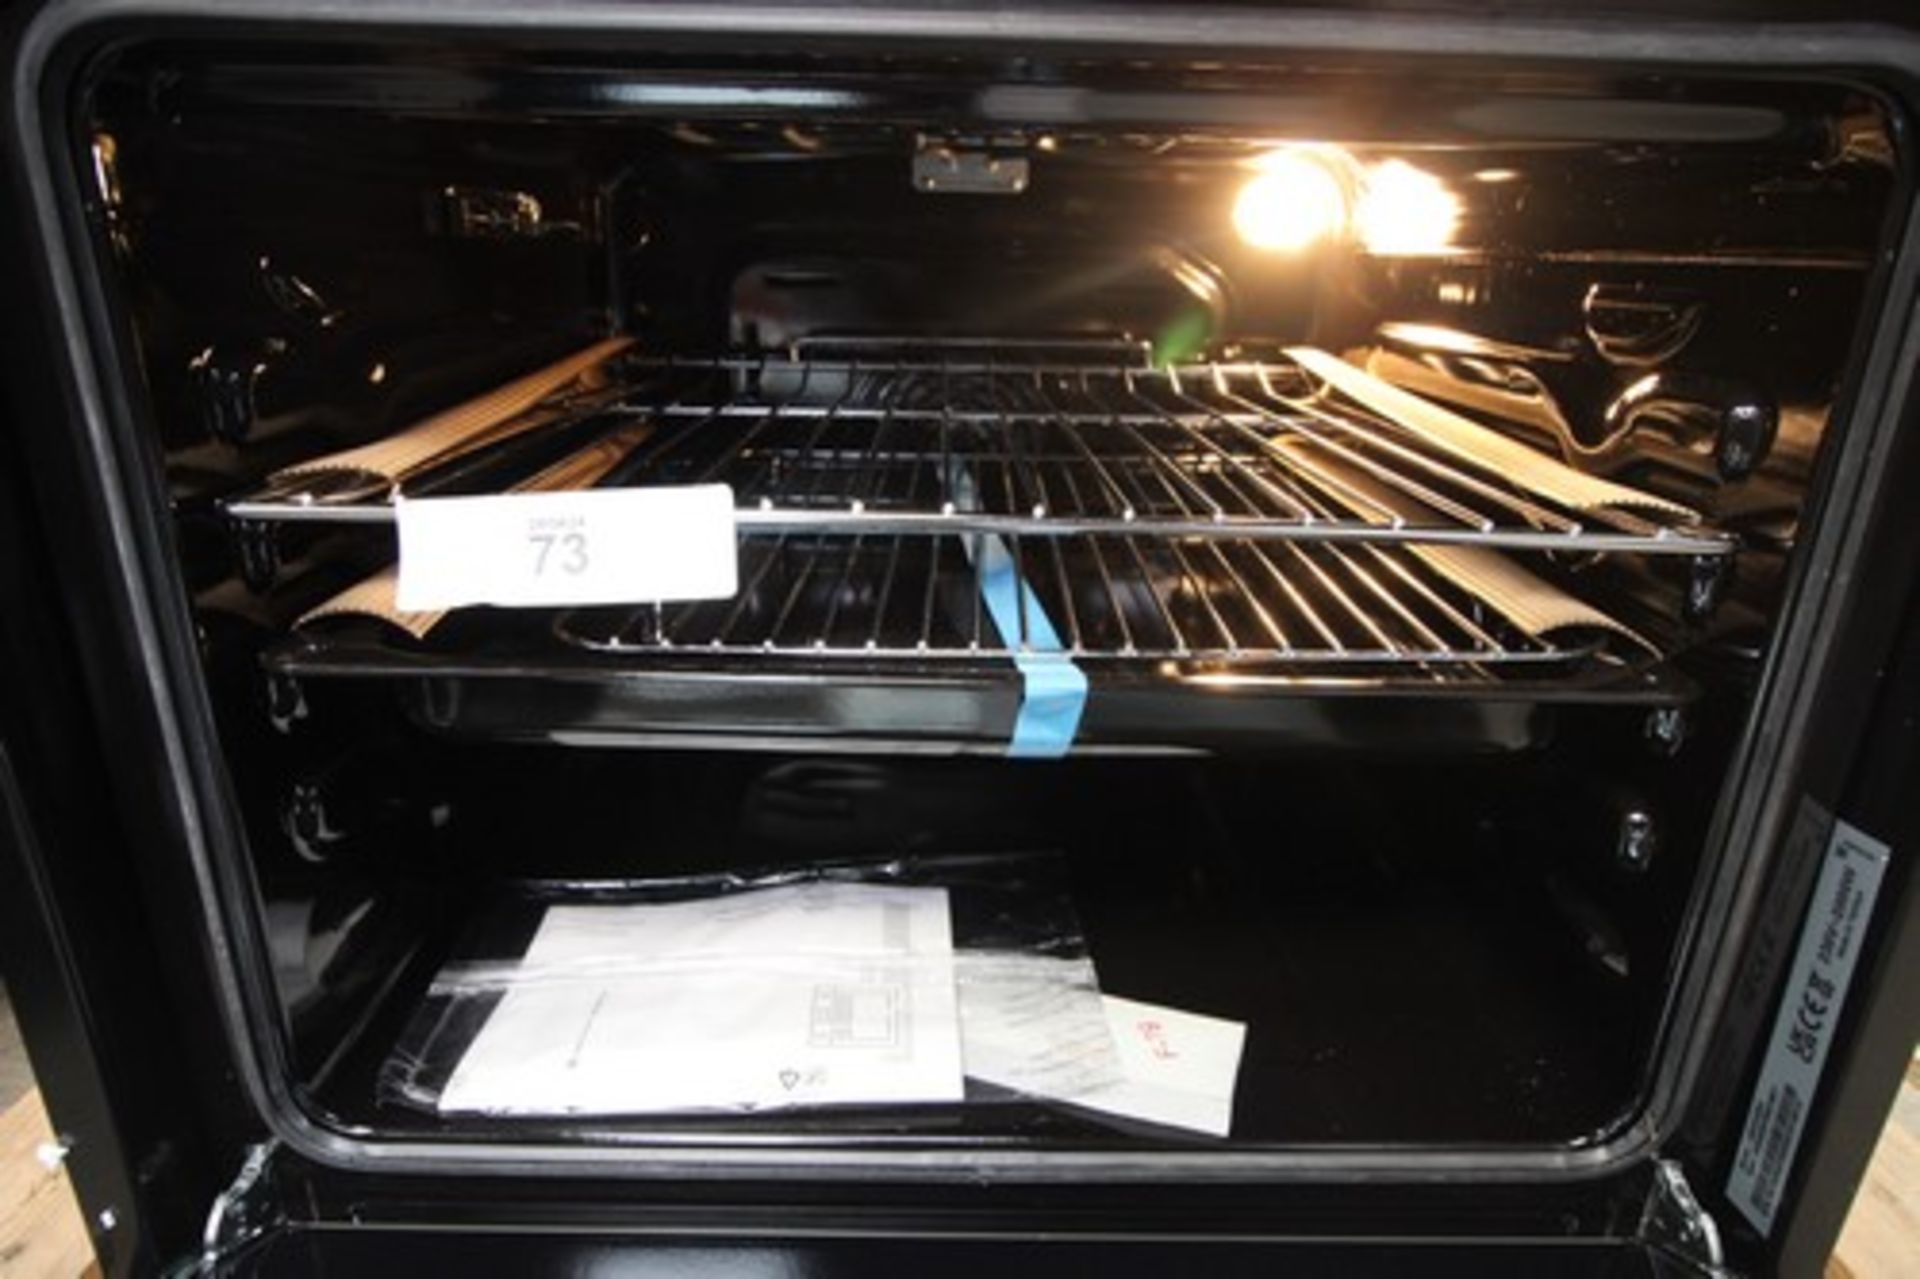 1 x Culina 65L single oven, black, model No: UB0652BK, small dent top right panel - new (ES9) - Image 2 of 3